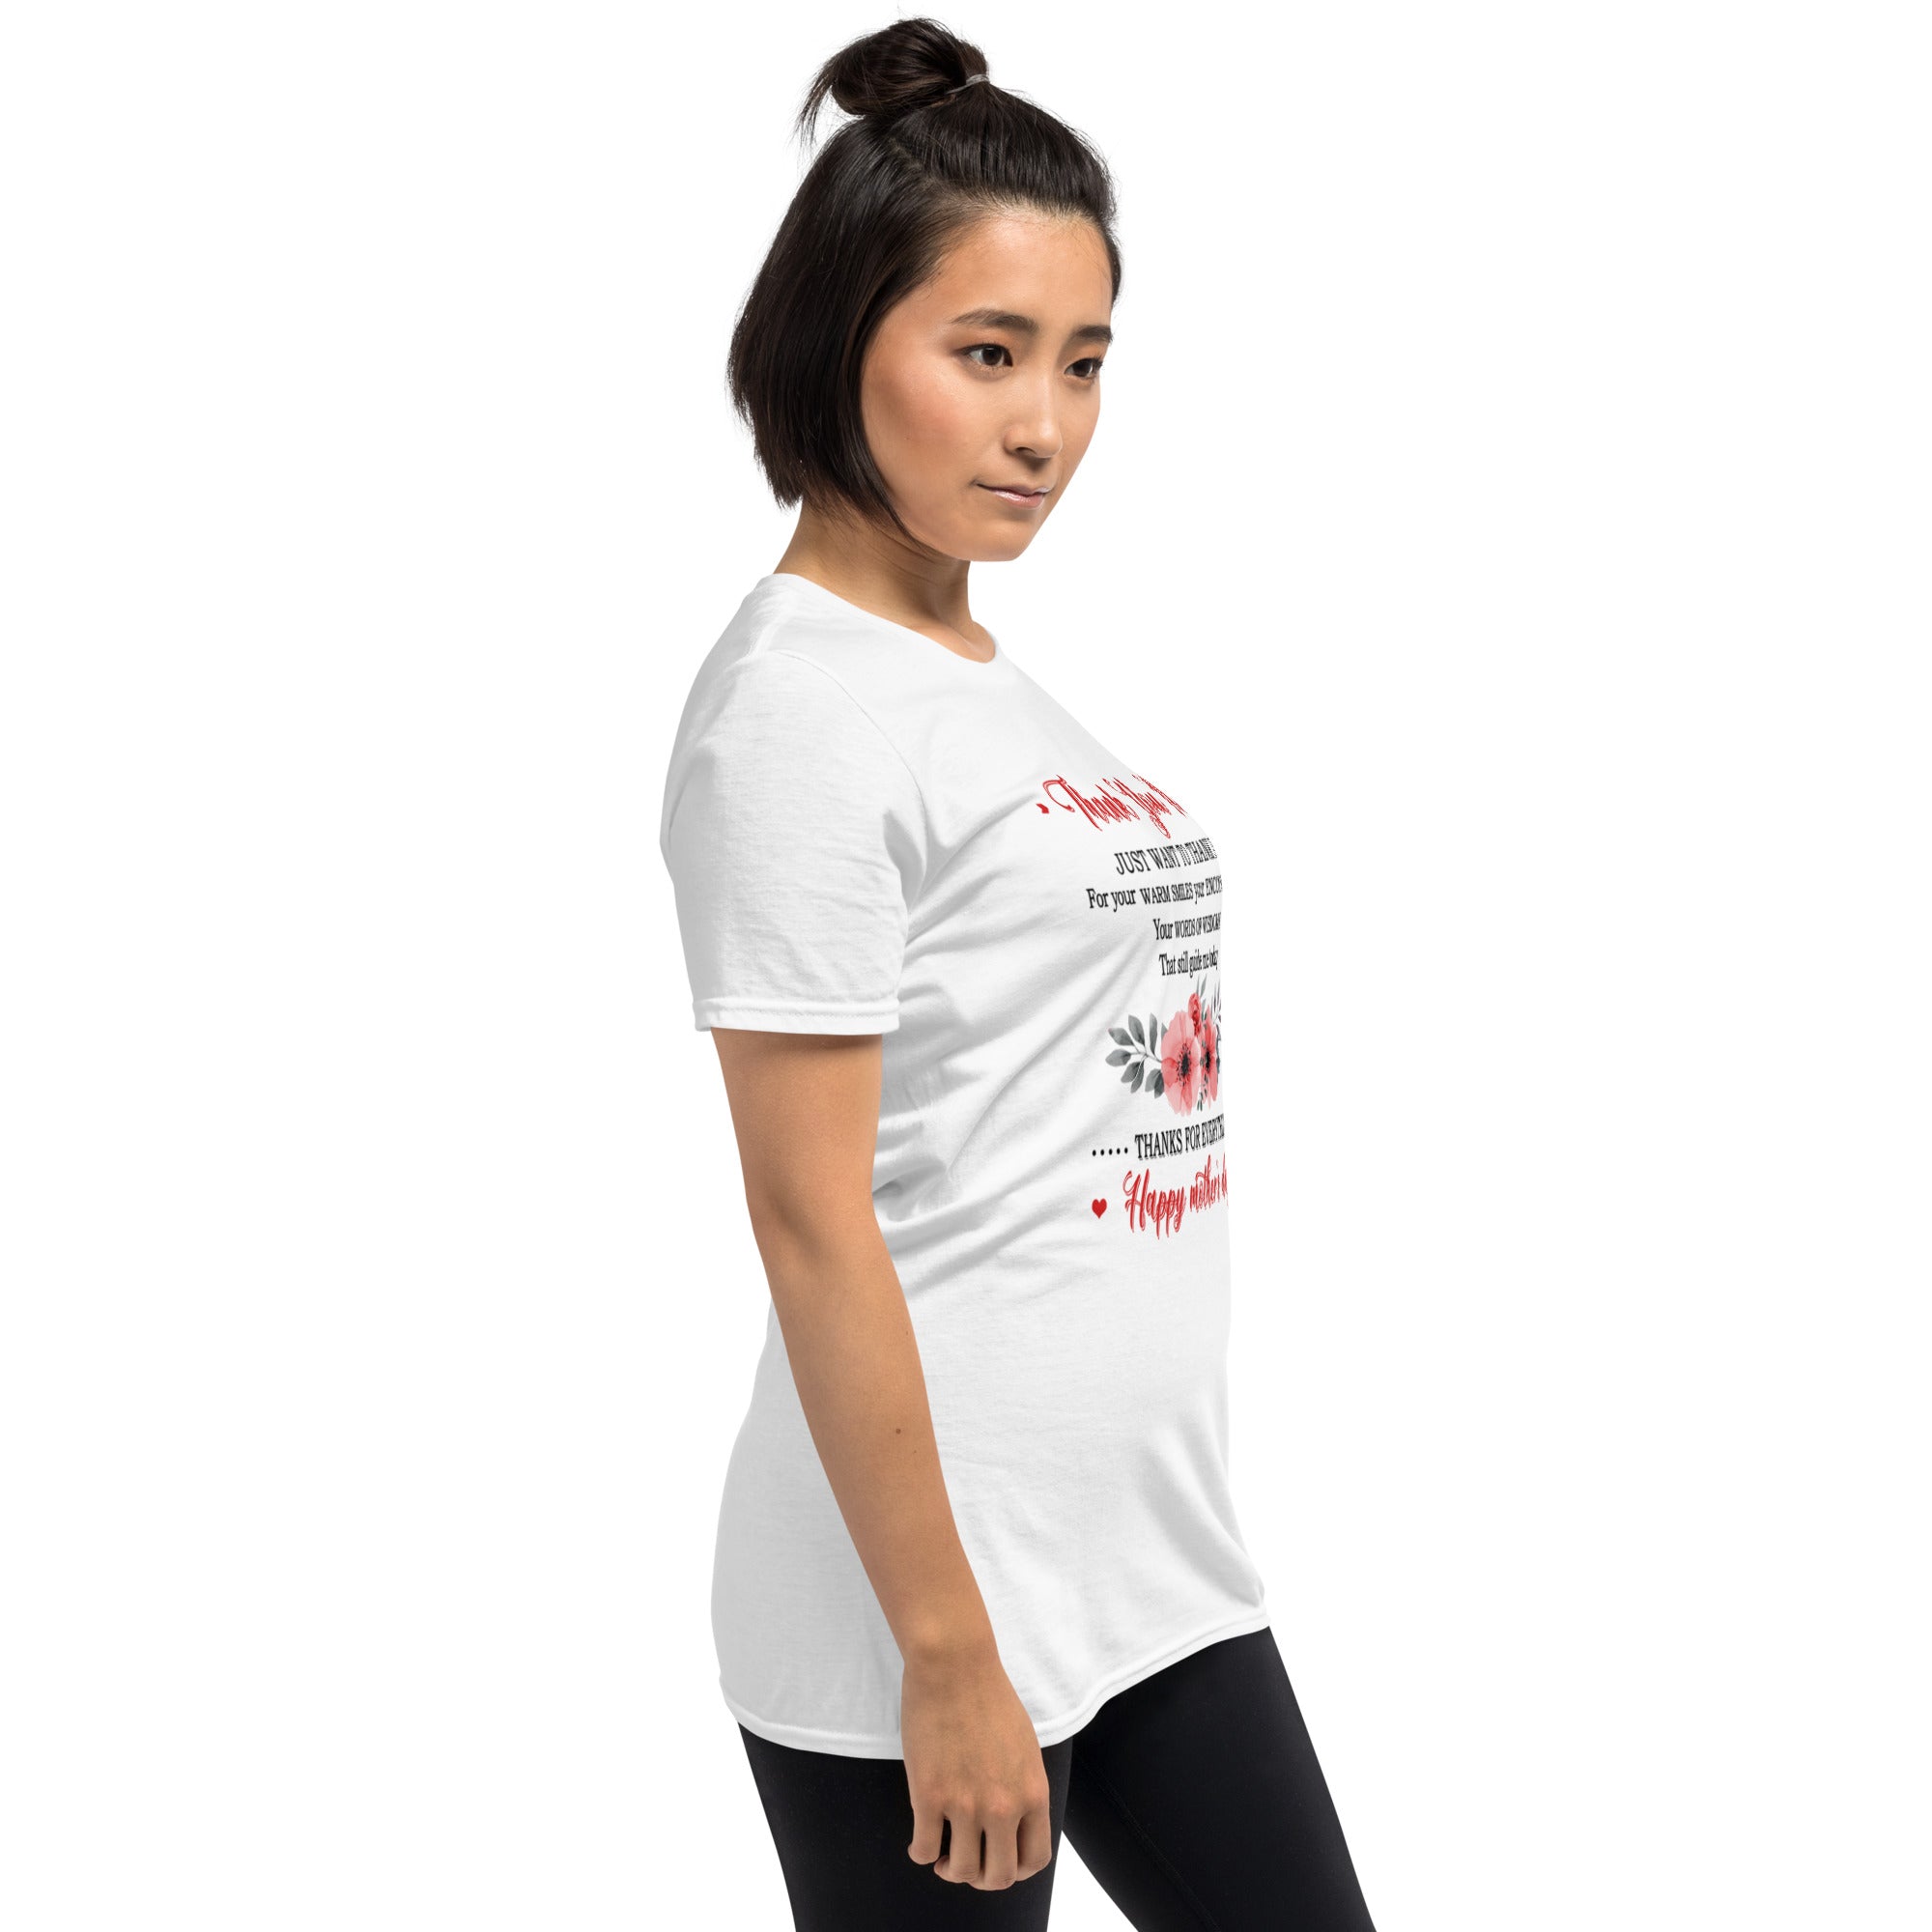 Short-Sleeve Unisex T-Shirt- Mother's Day T- Shirt